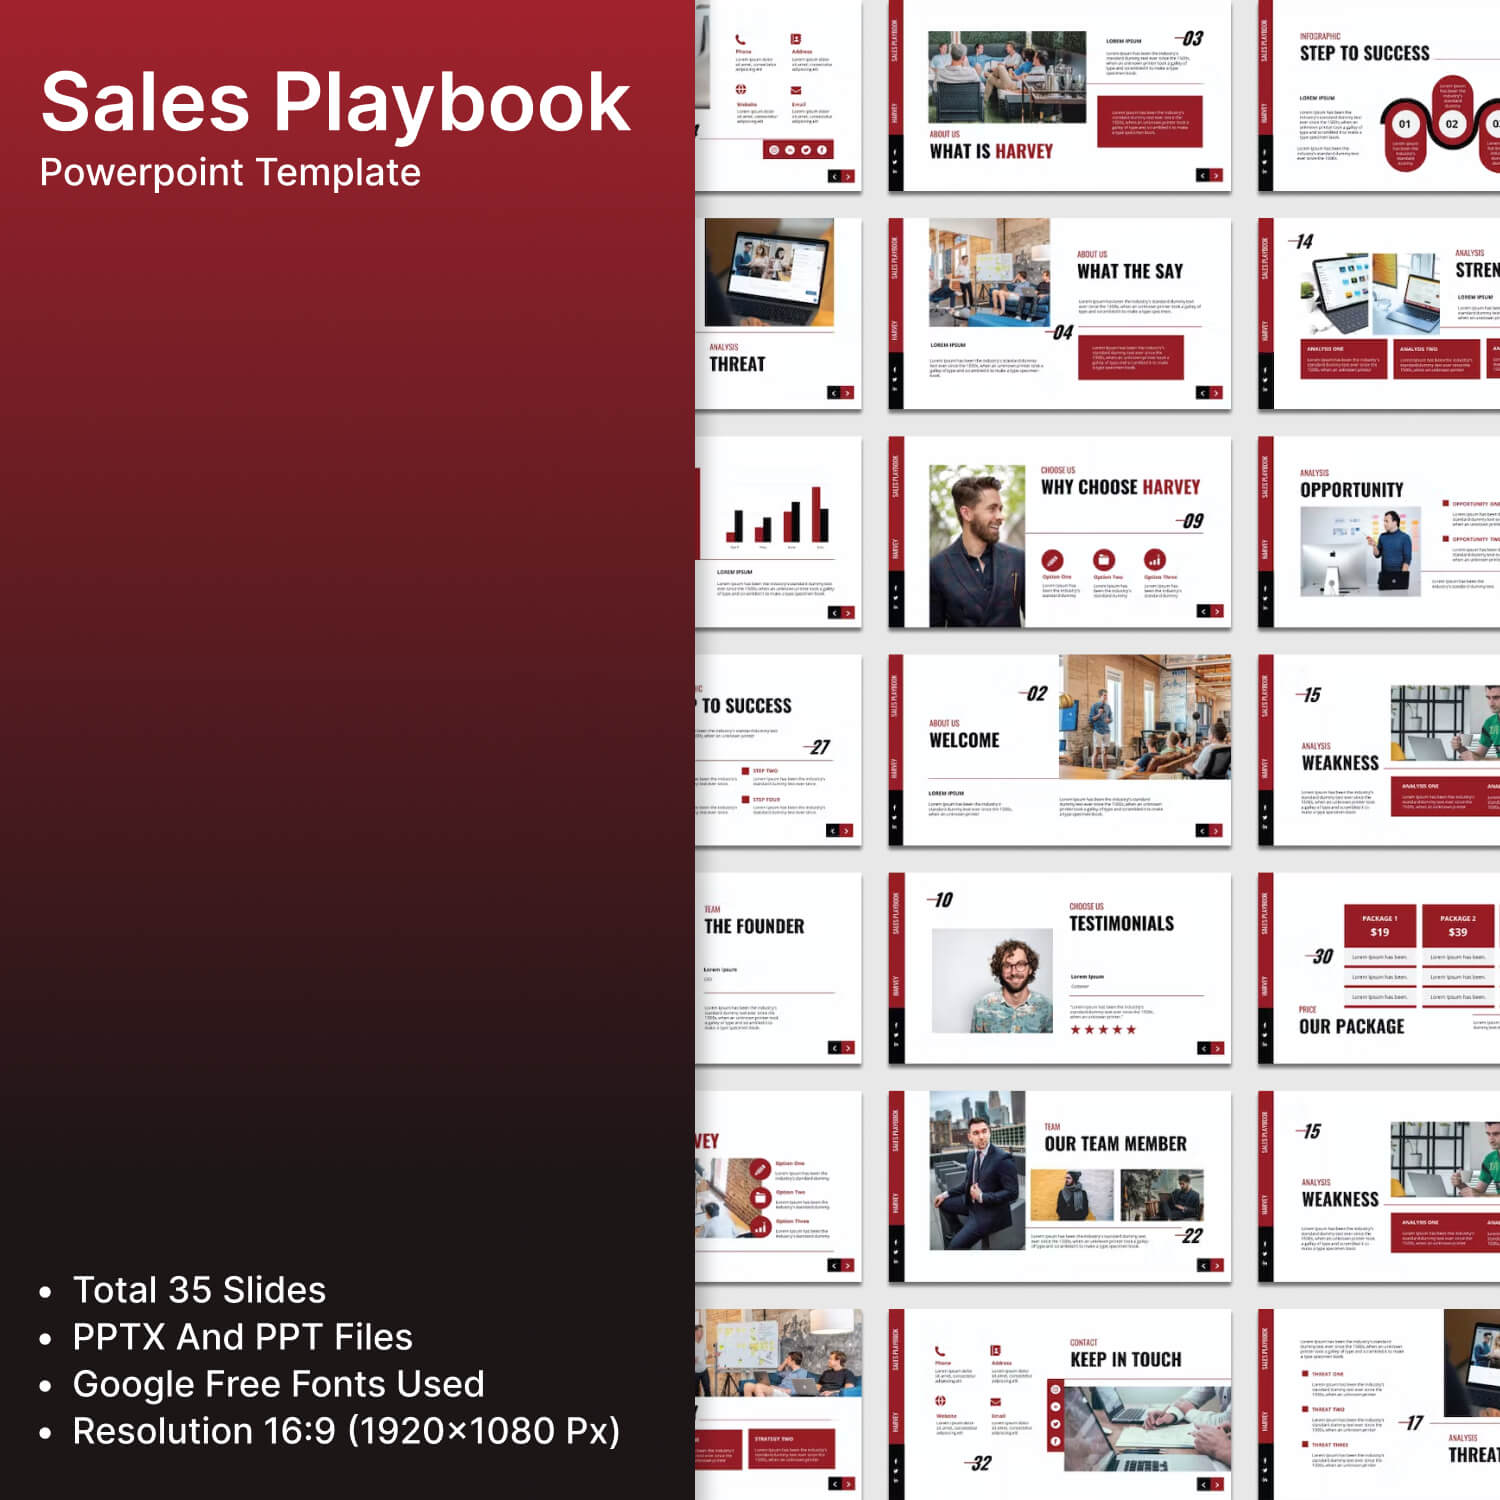 Sales Playbook Powerpoint Template.